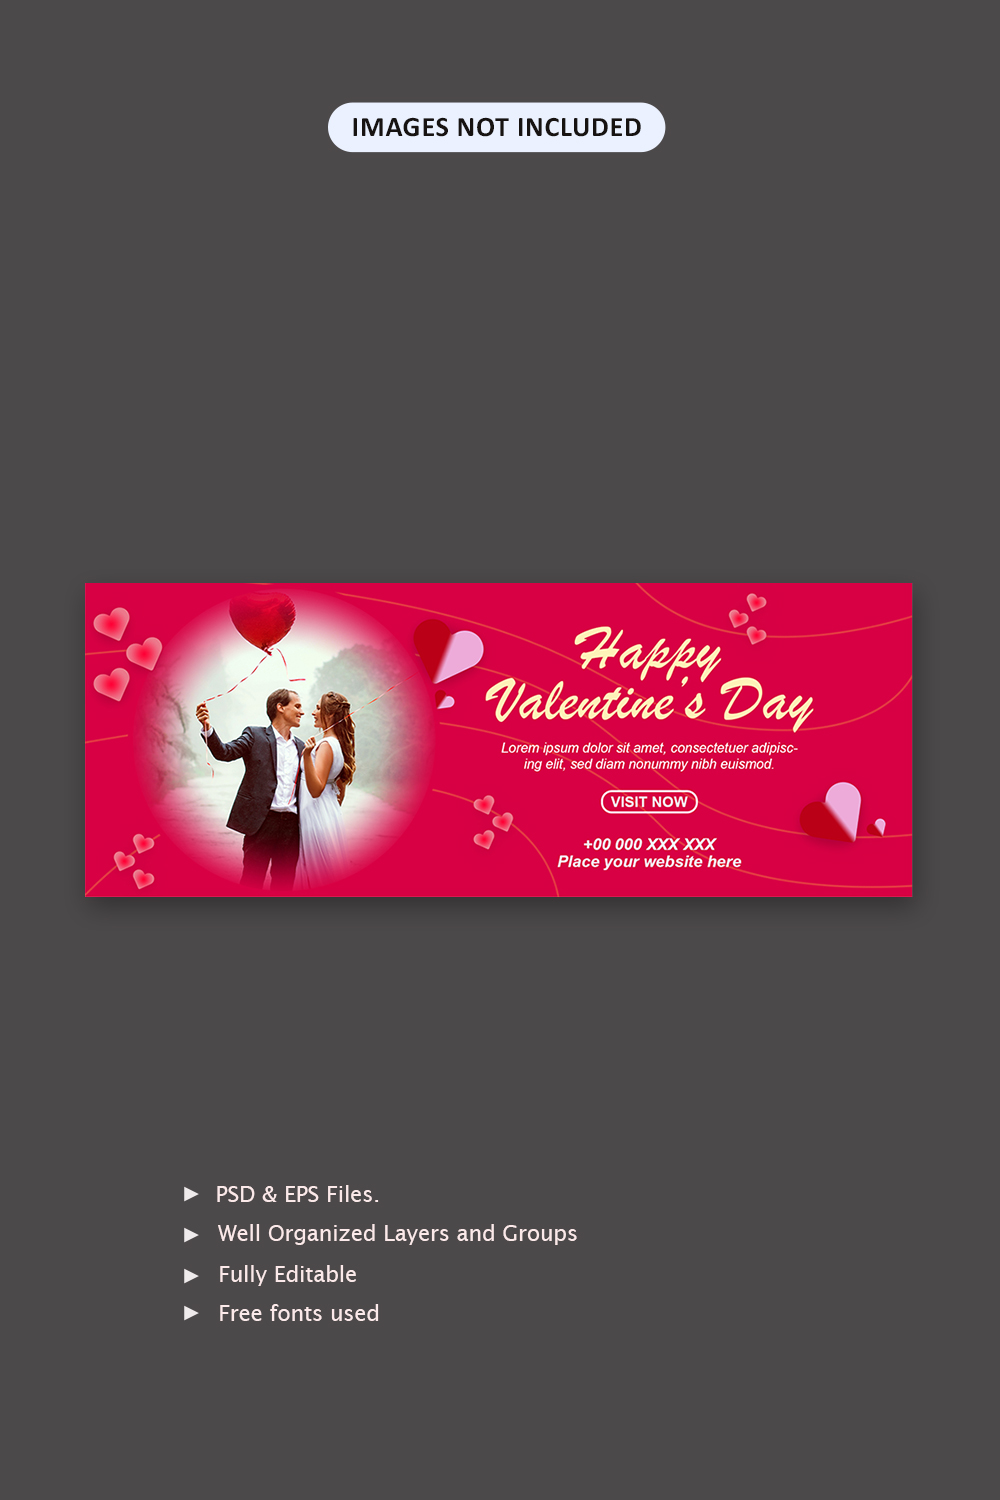 Valentine’s day social media cover banner design pinterest preview image.